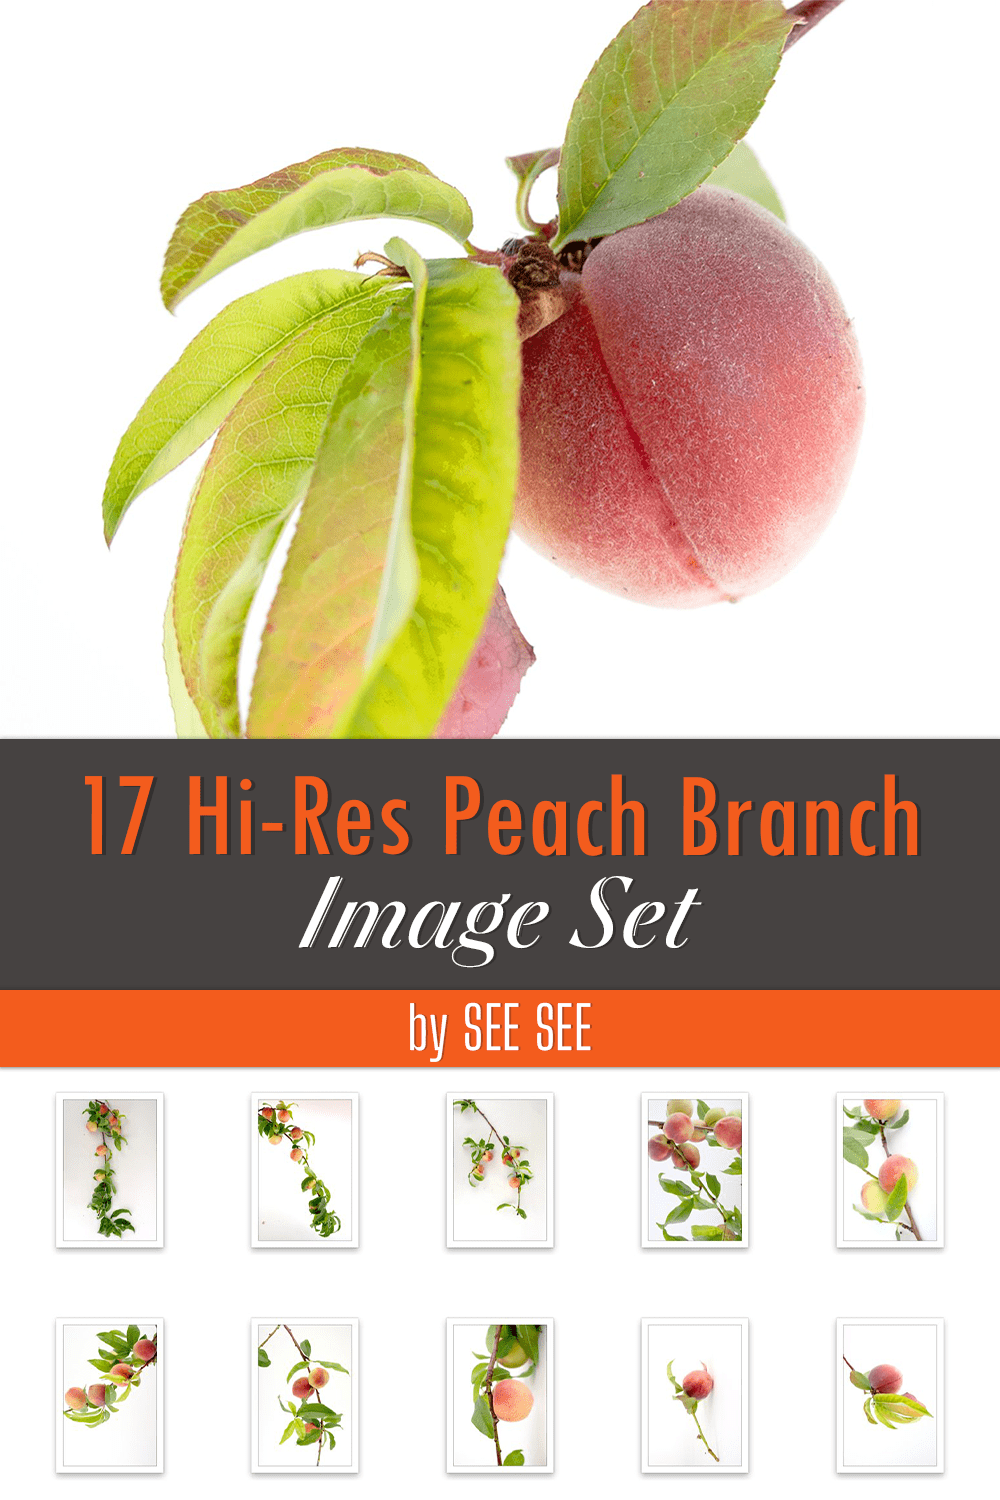 17 Hi-Res Peach Branch Image Set - pinterest image preview.